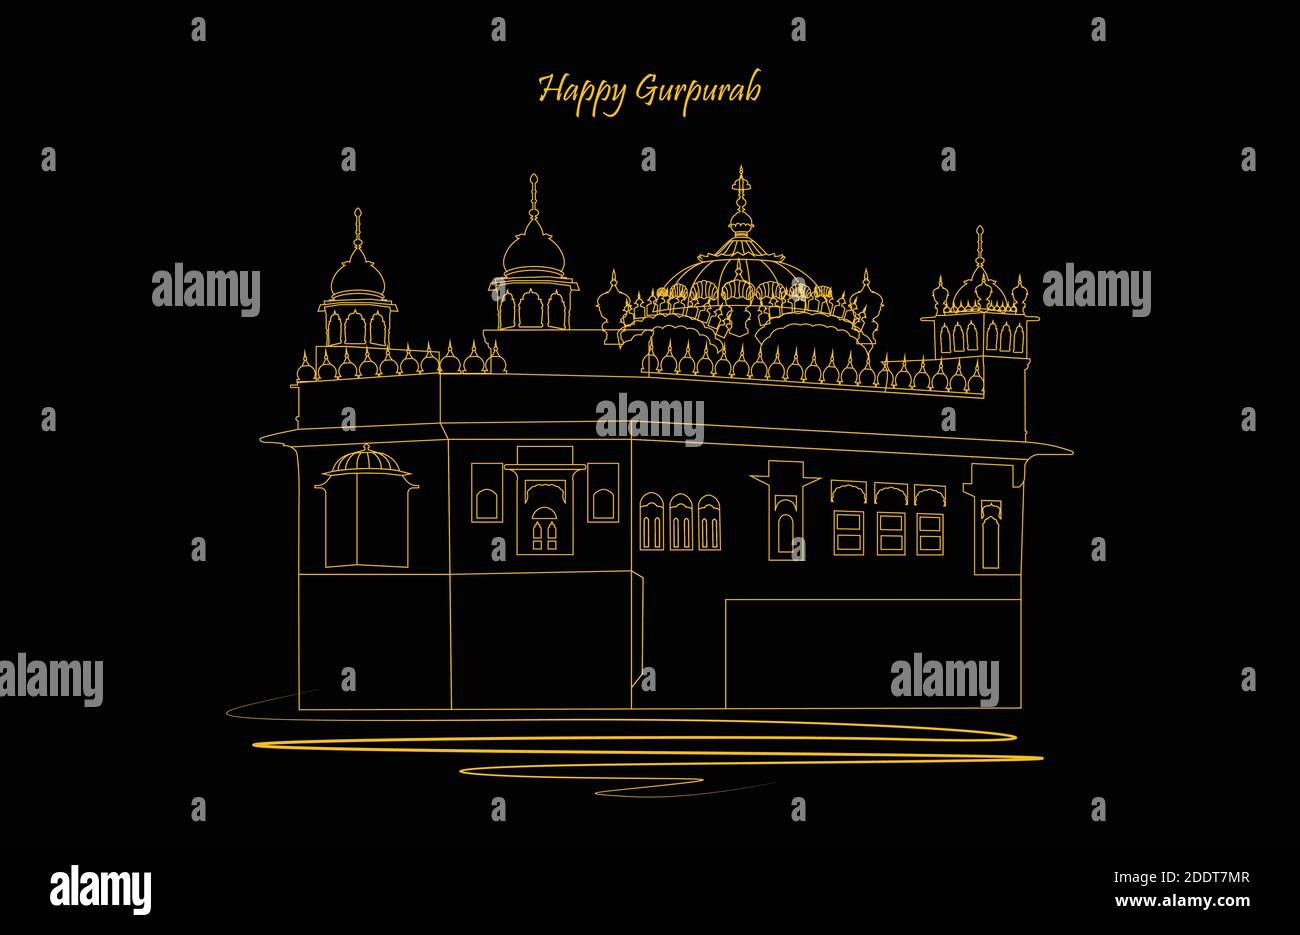 Vector illustration of guru nanak prakash parv. Happy Gurpurab. Golden and white colored temple on dark color background Stock Vector